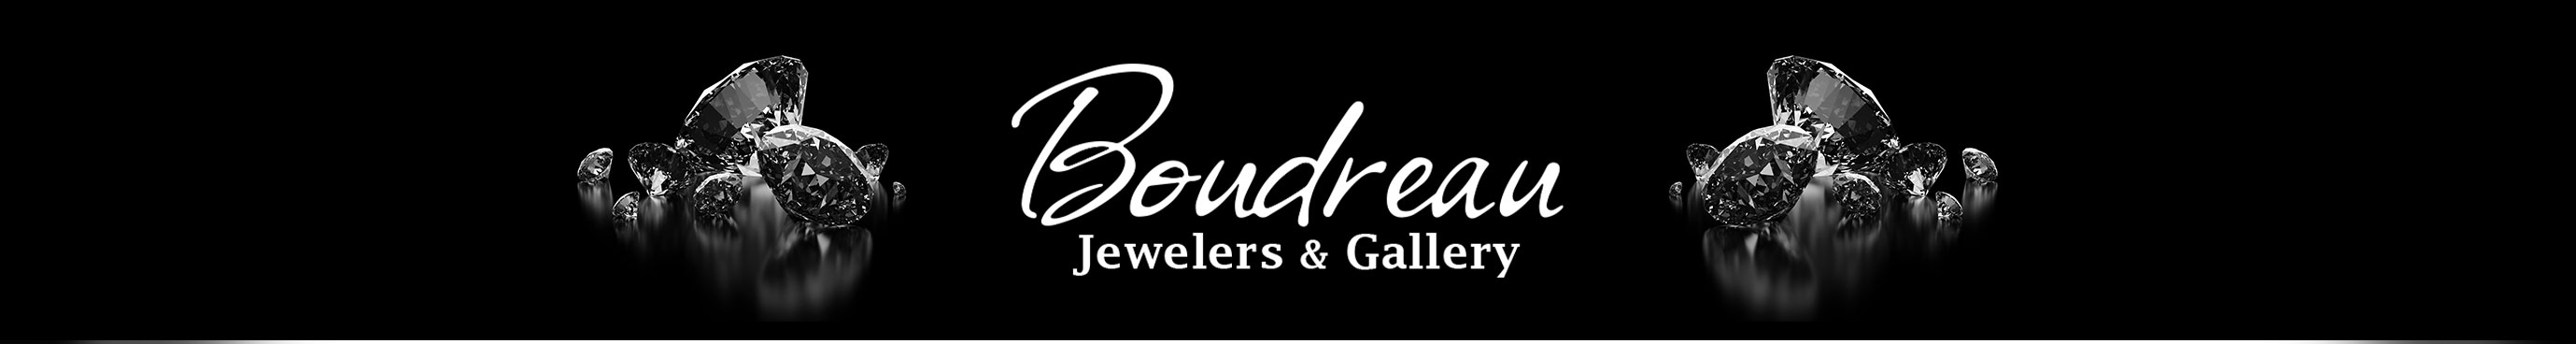 Boudreau's Jewelers & Gallery Logo